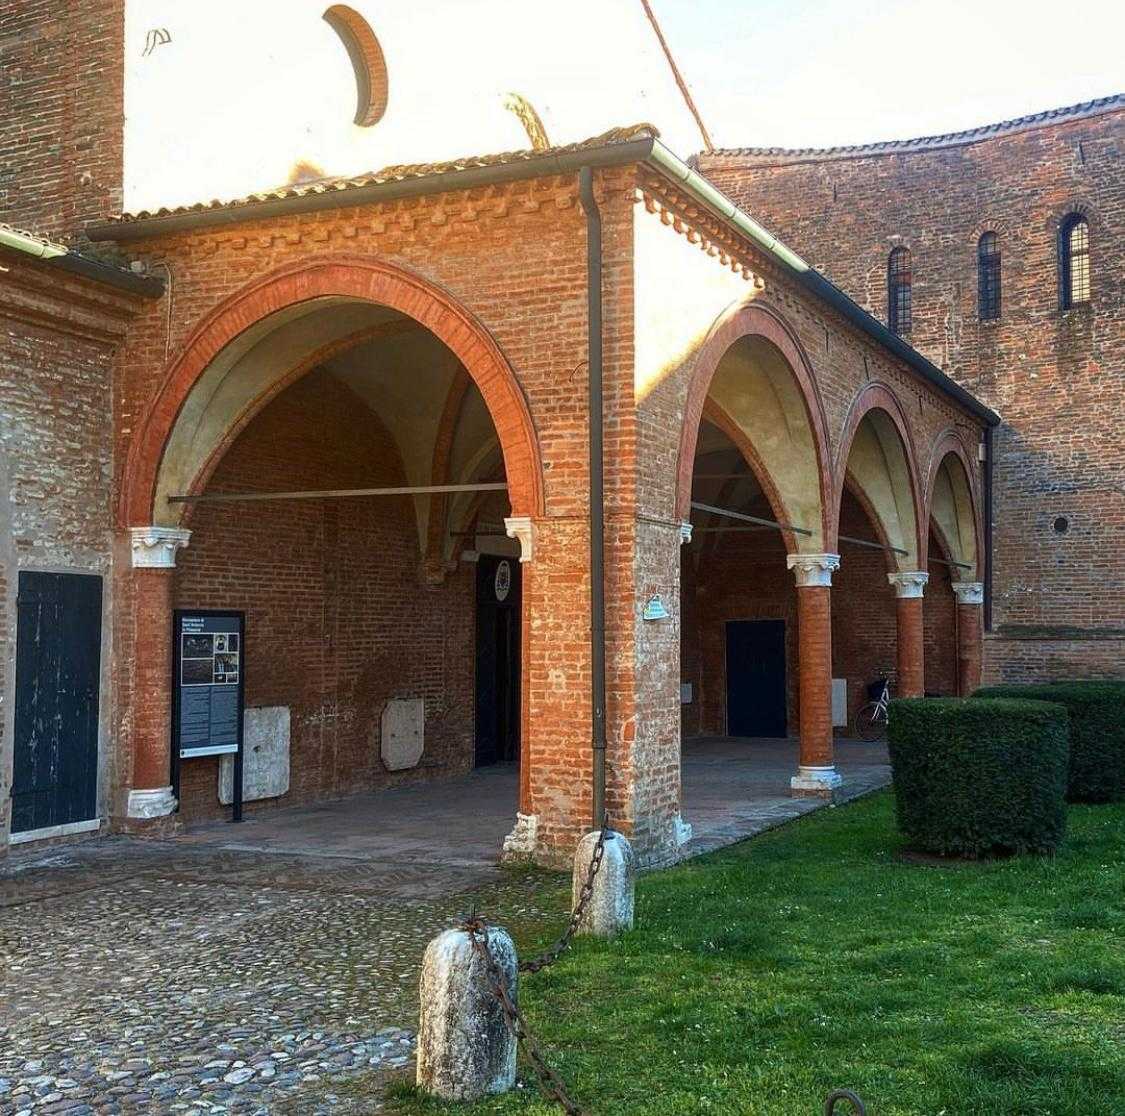 The Monastery of Sant'Antonio in Polesine, Ferrara